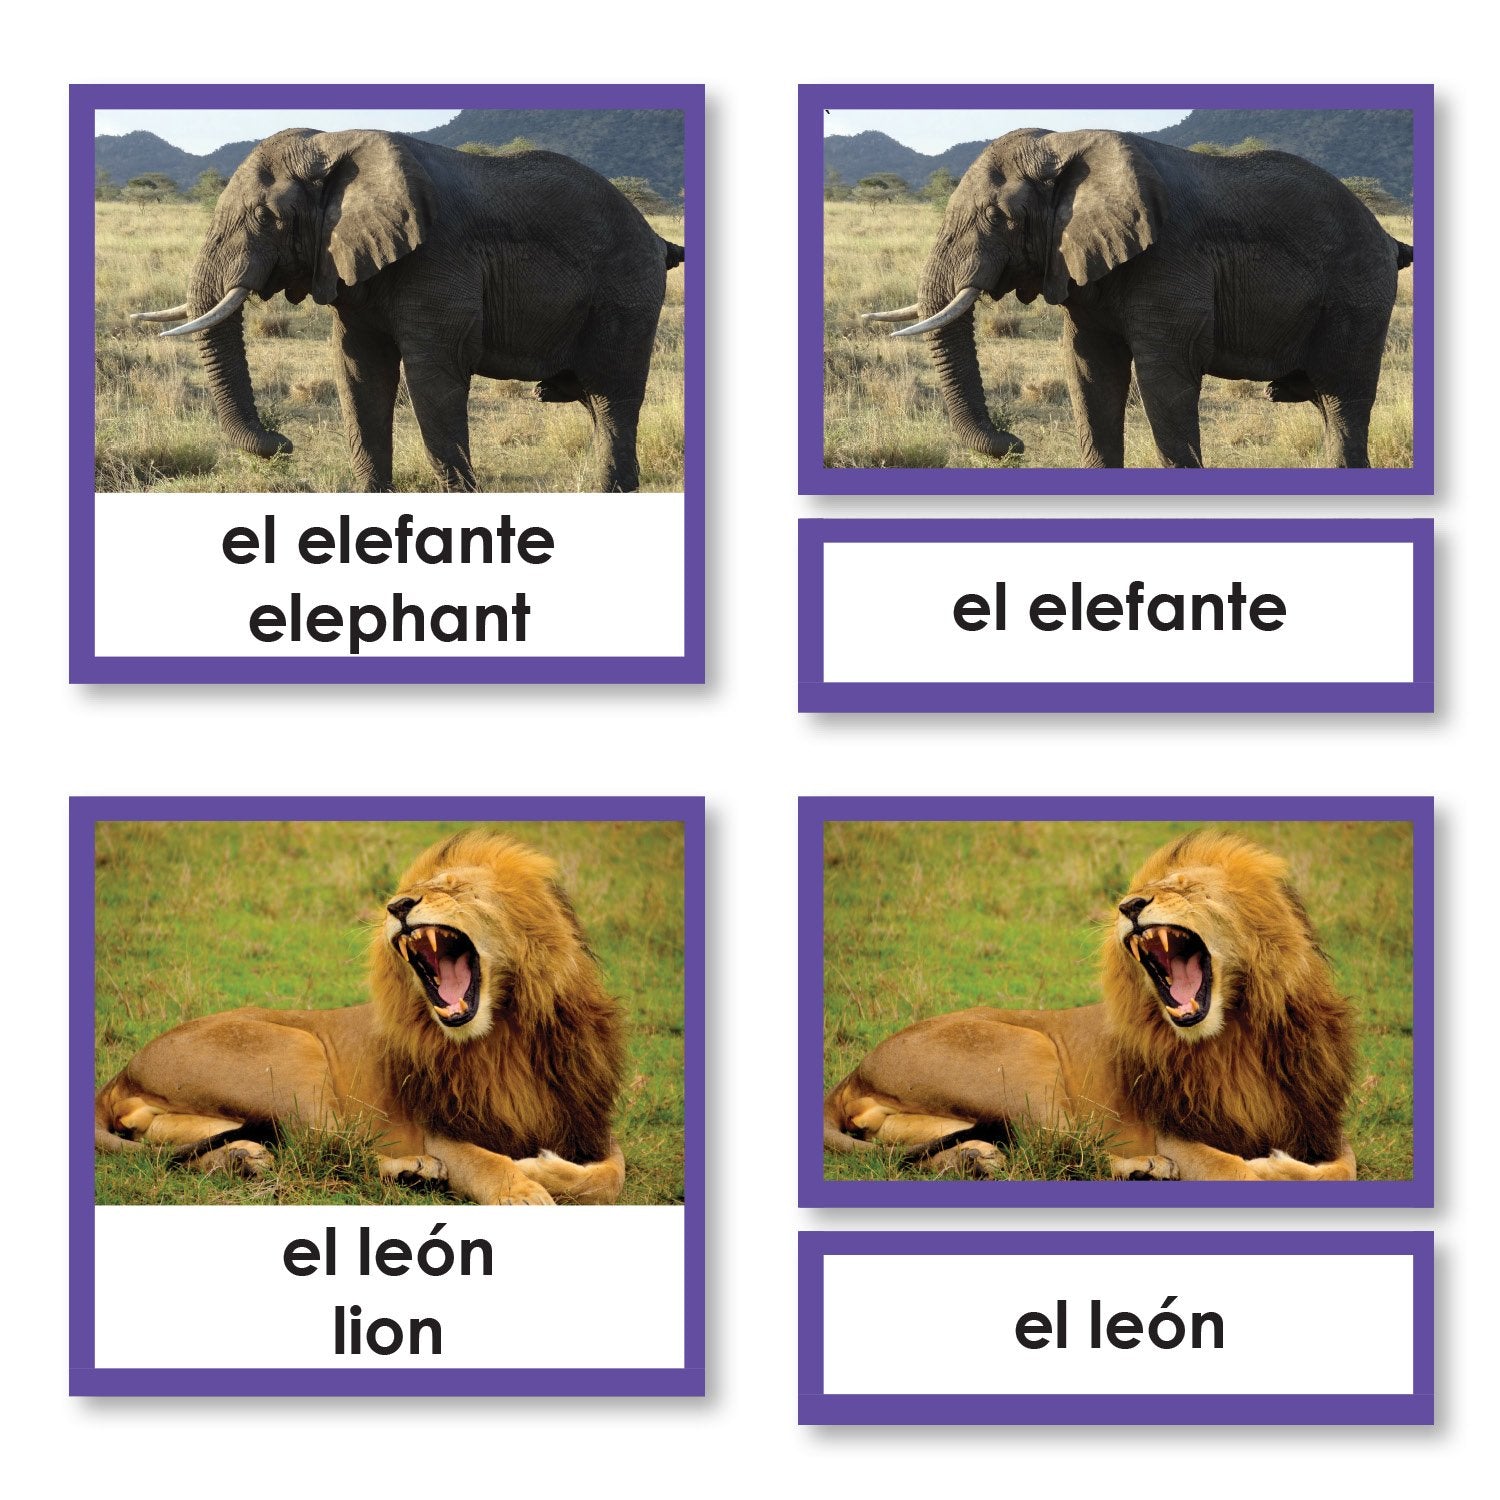 Language Arts-Spanish - Spanish Language Animals 3-Part Cards With Photographs